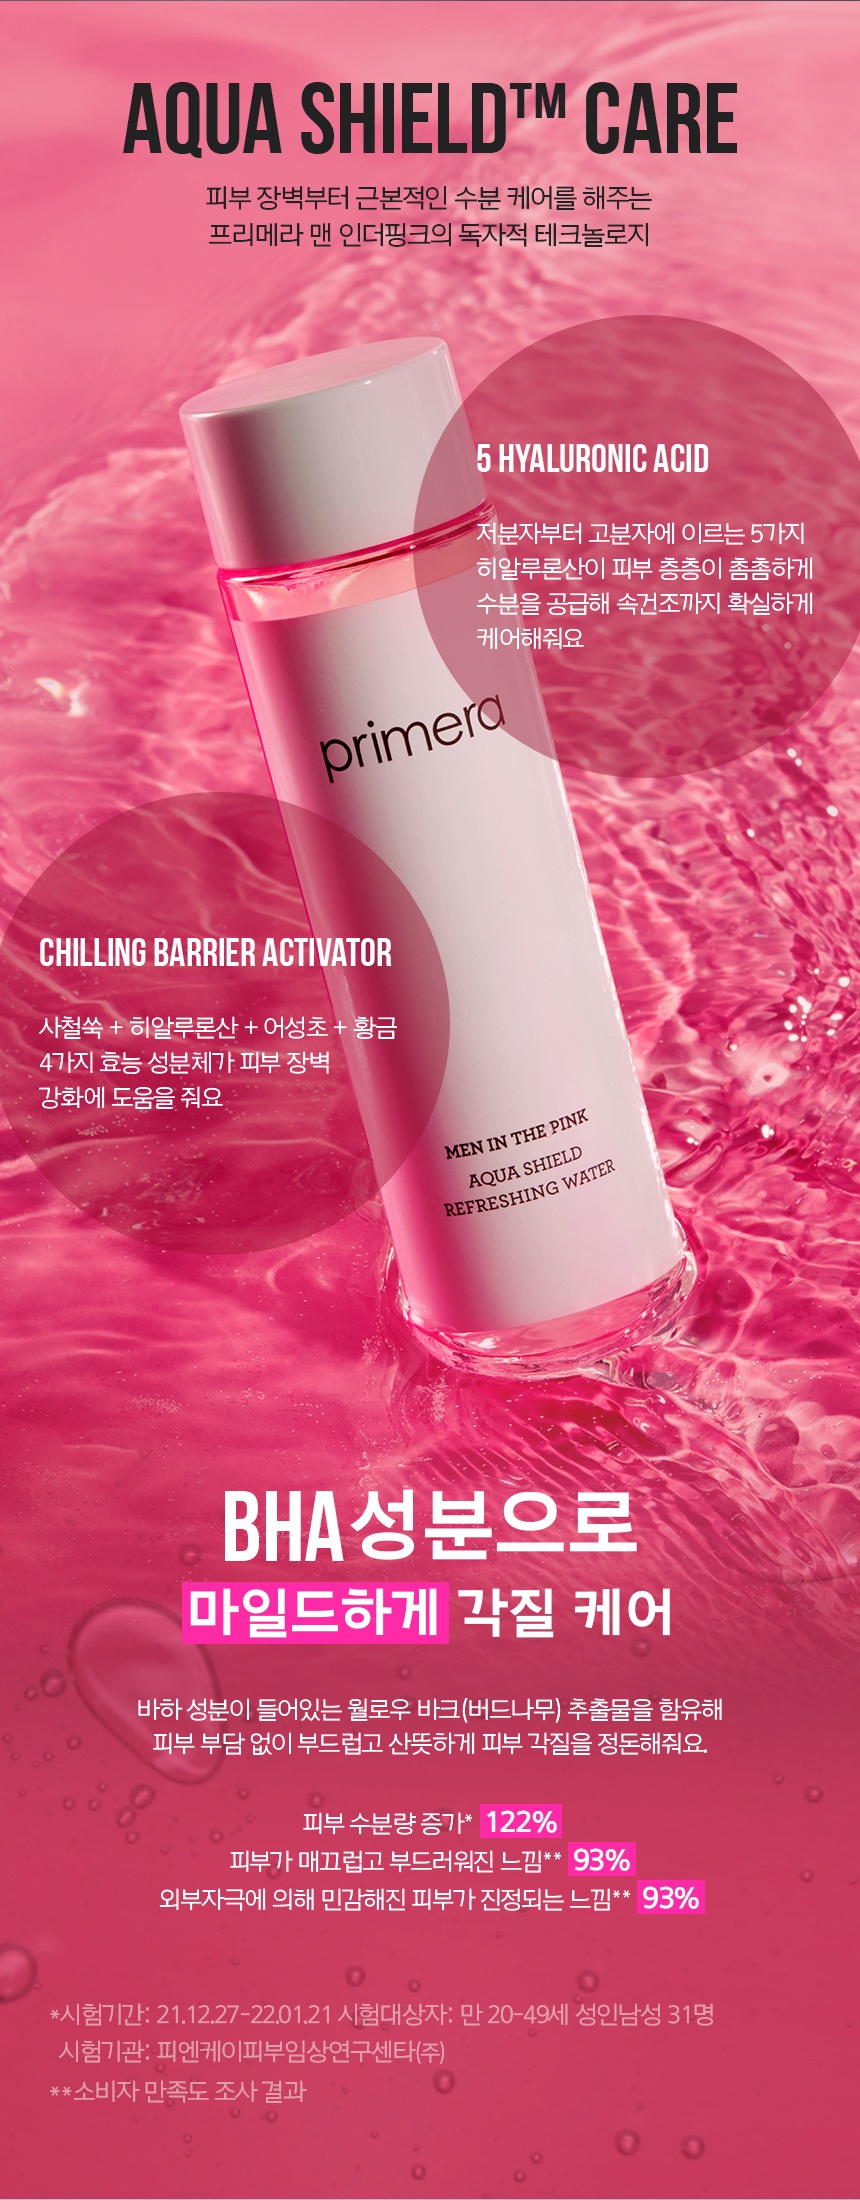 primera Men In The Pink Aqua Shield Refreshing Water korean skincare product onlien shop malaysia India Thailand3